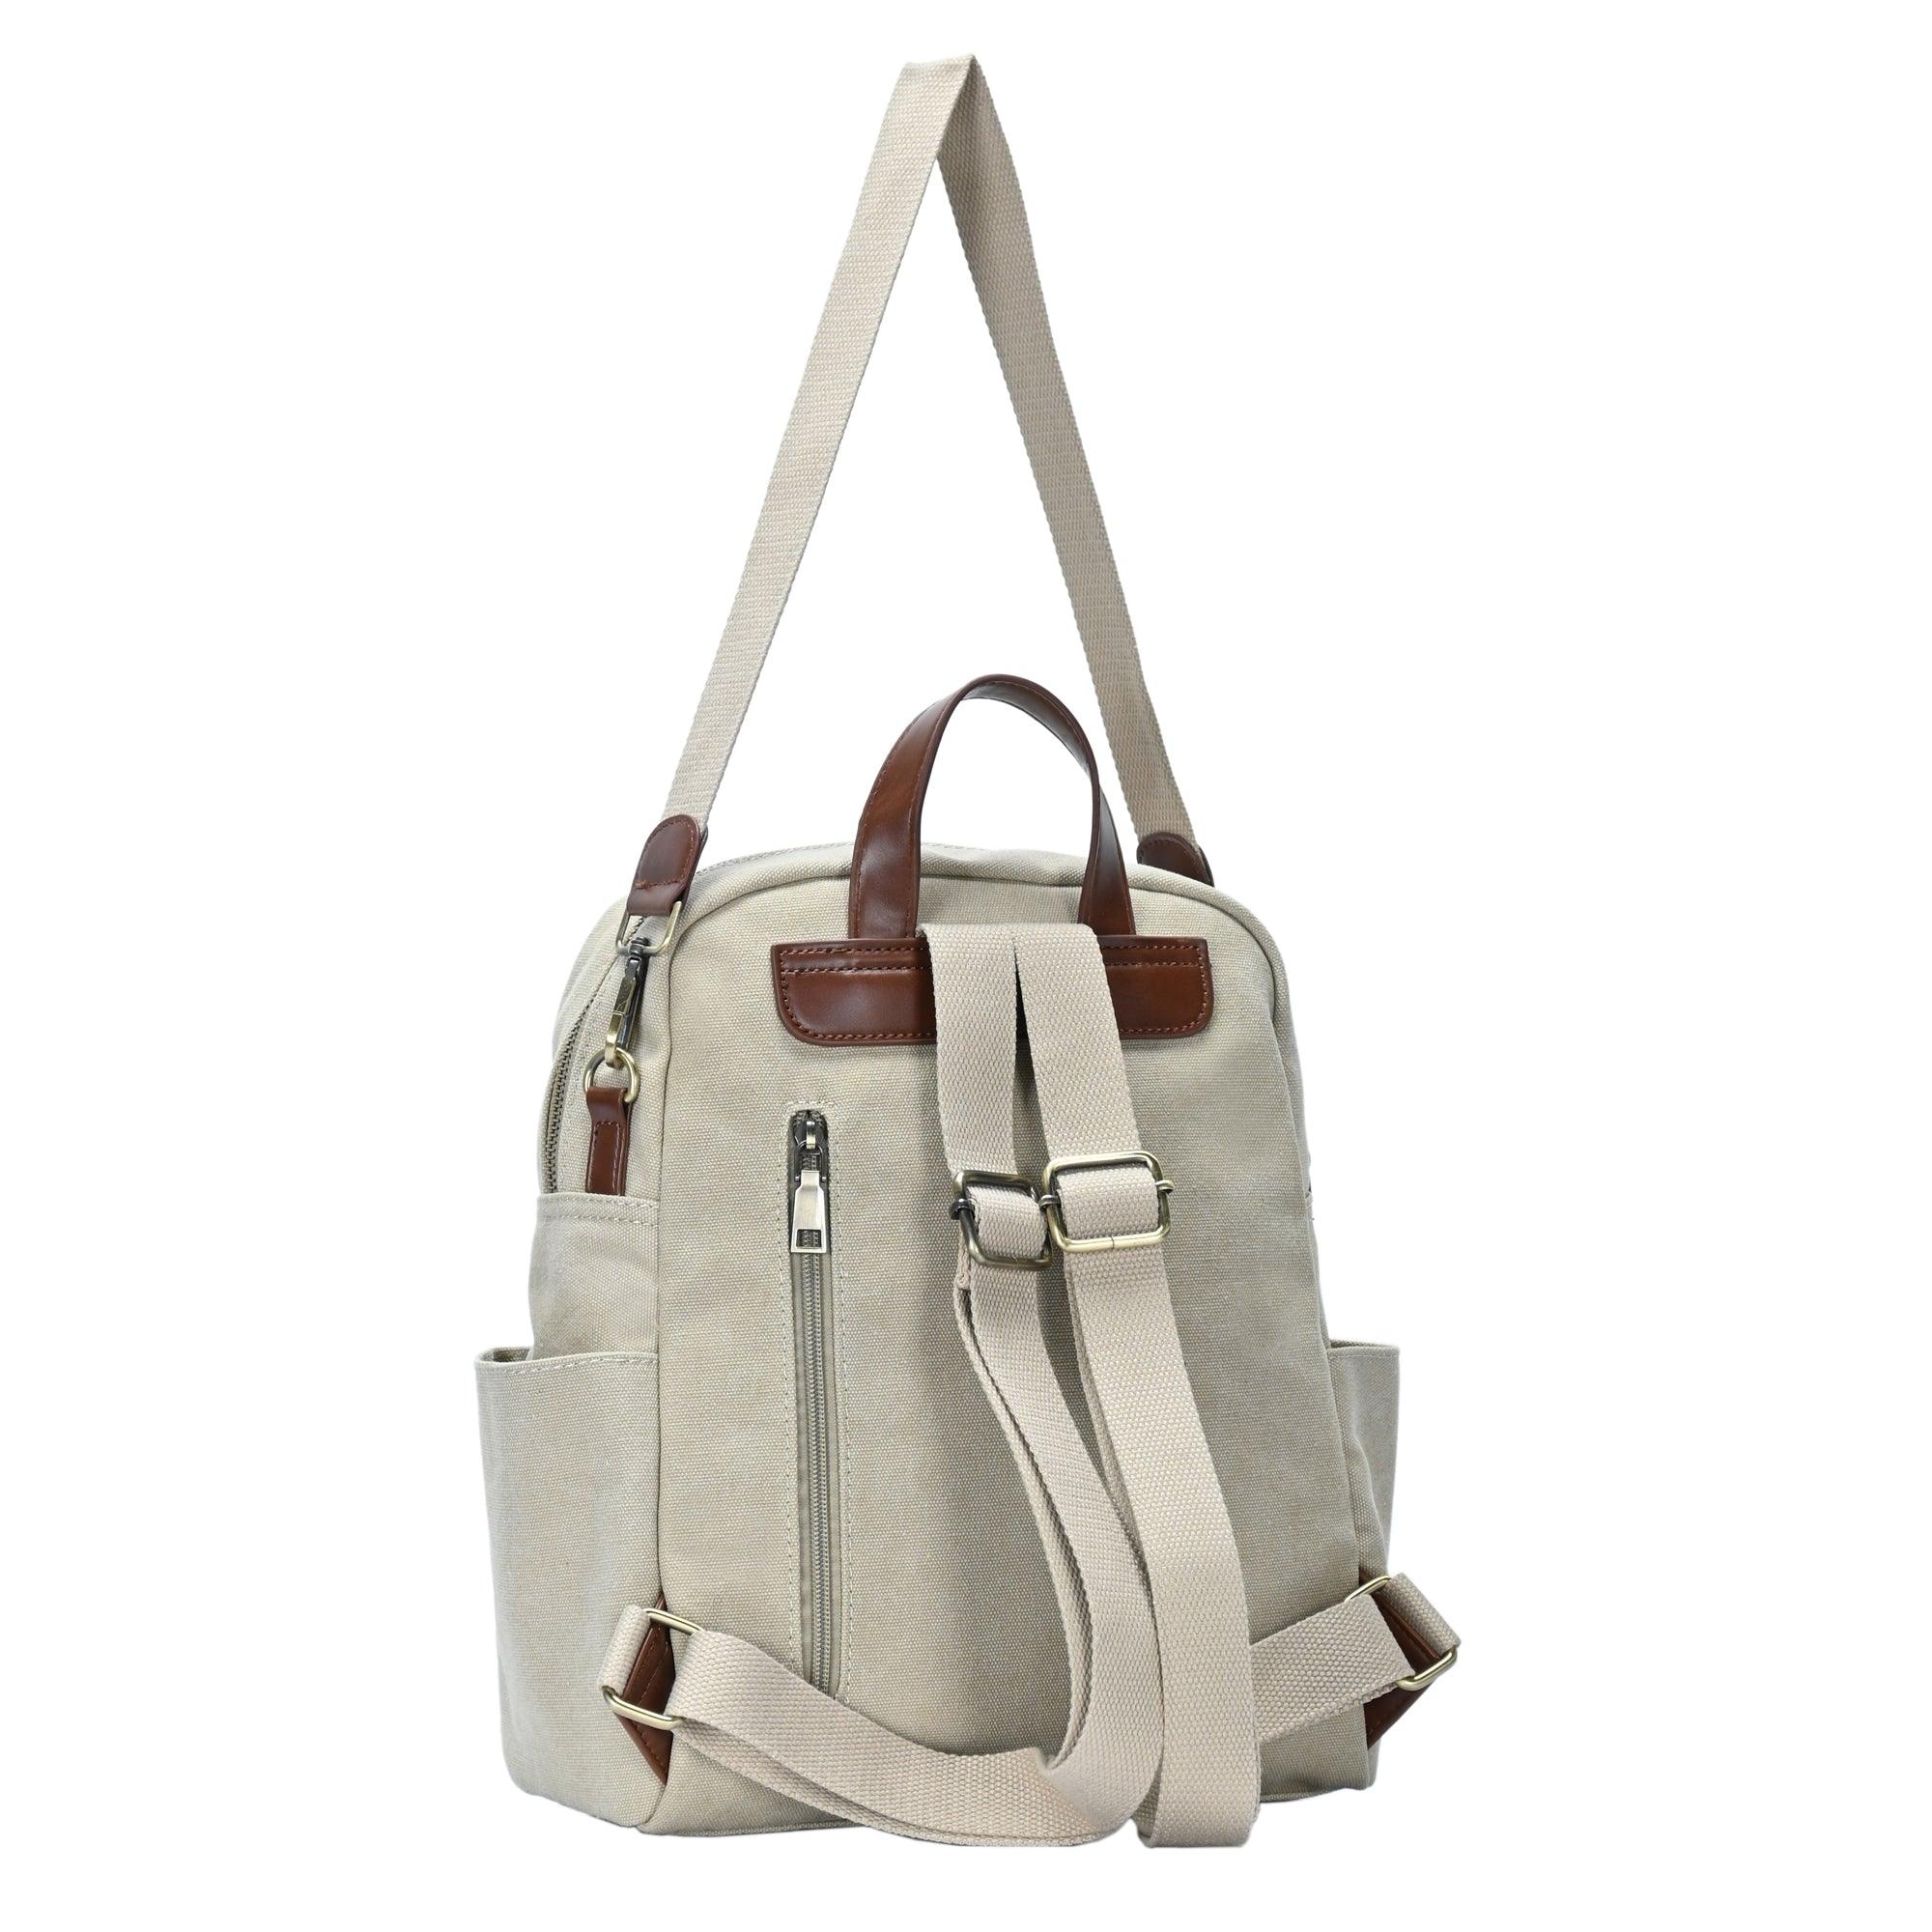 COFIHOME Backpack Purse for Women Waterproof Rucksack Anti-theft Handbag  Travel Bag : Clothing, Shoes & Jewelry - Amazon.com